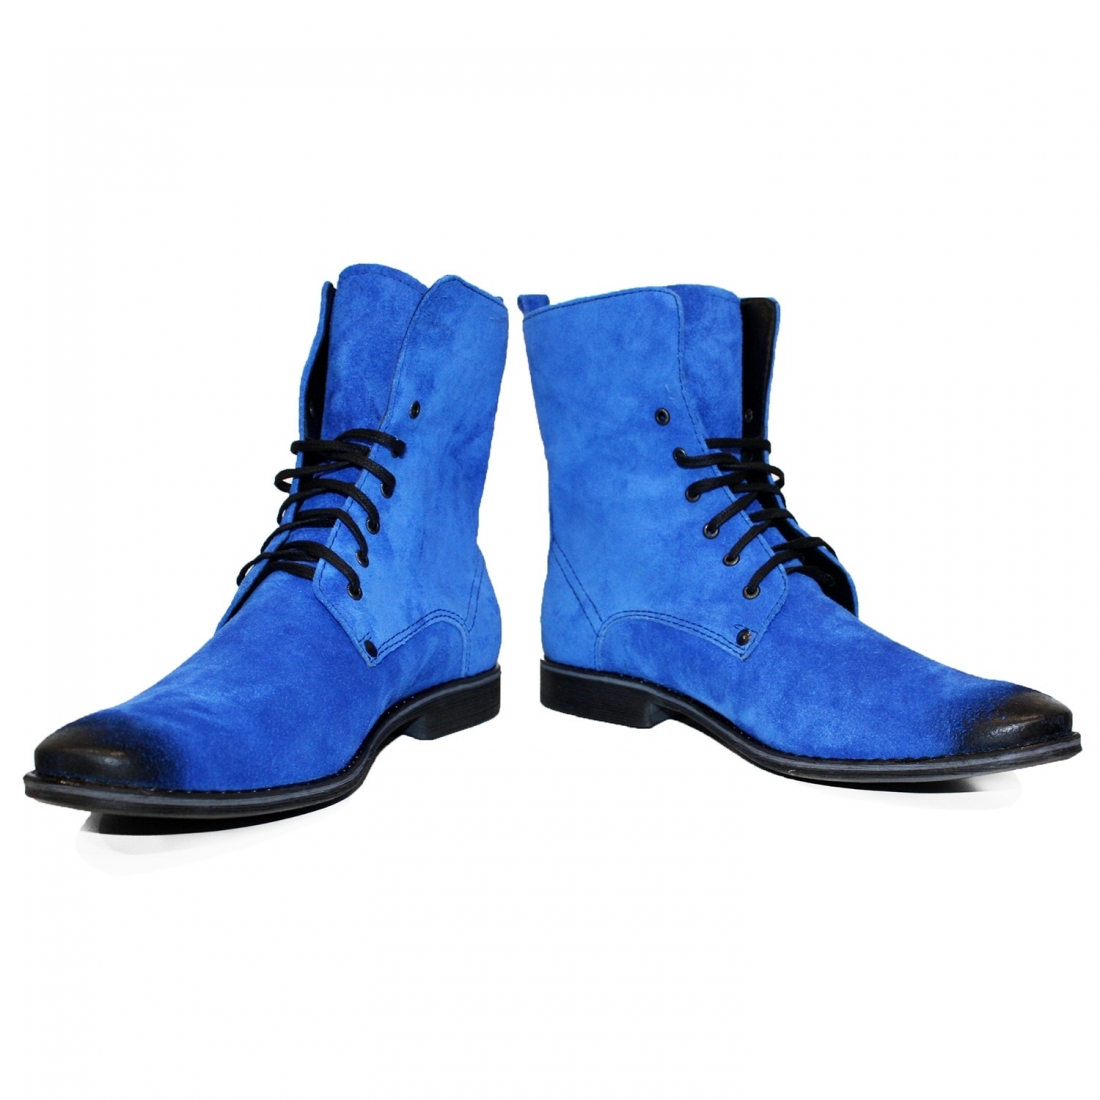 Modello Domatetto - Botas Altas - Handmade Colorful Italian Leather Shoes